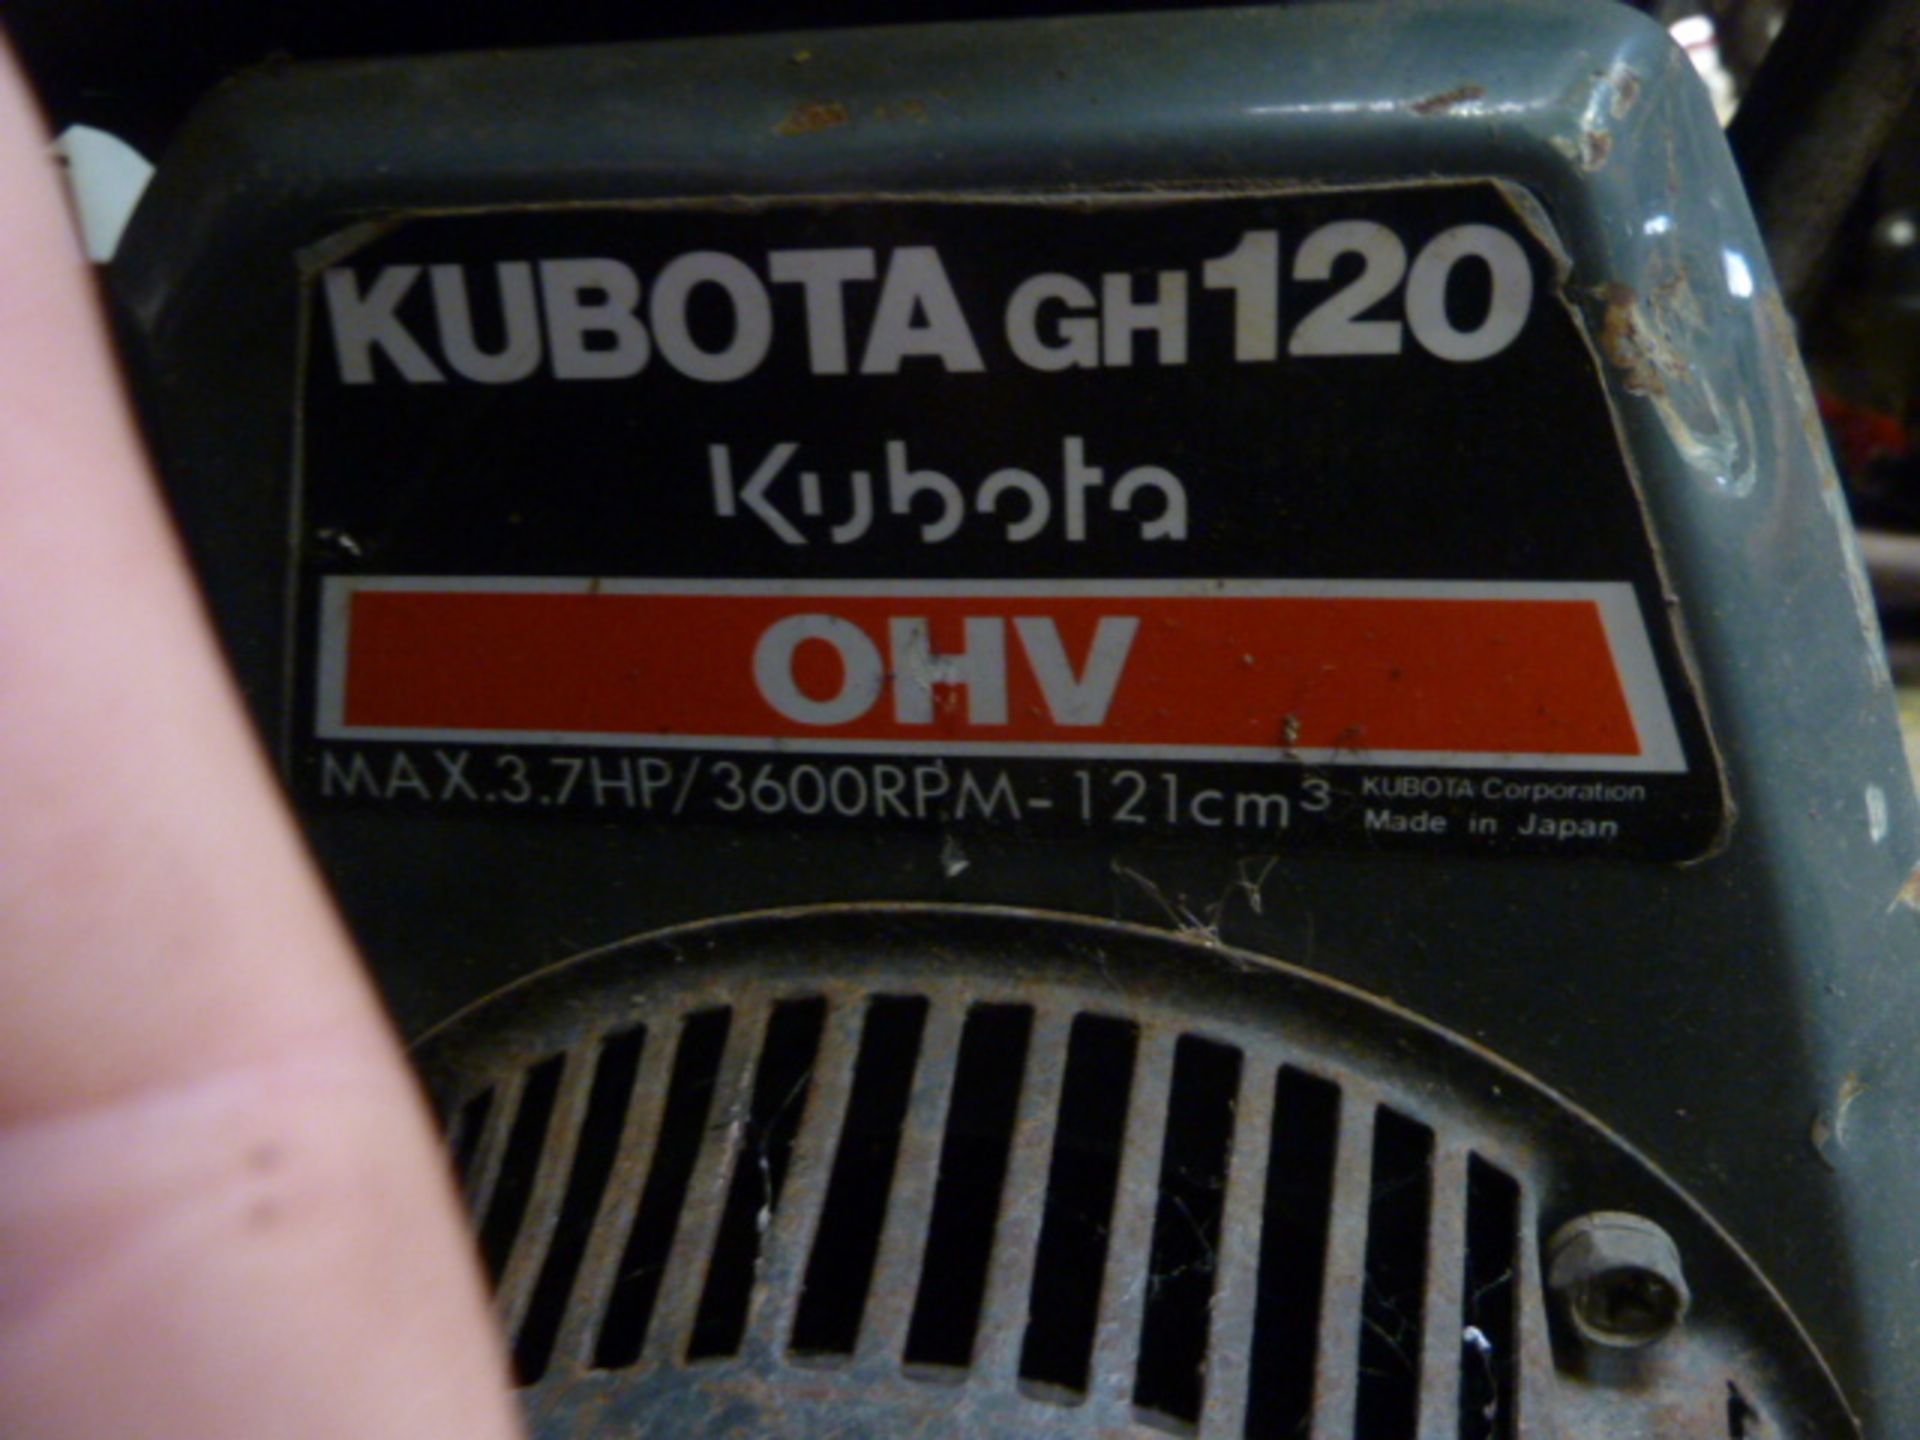 Kubota model TH120 3.7HP engine (spares or repairs) - Image 2 of 3